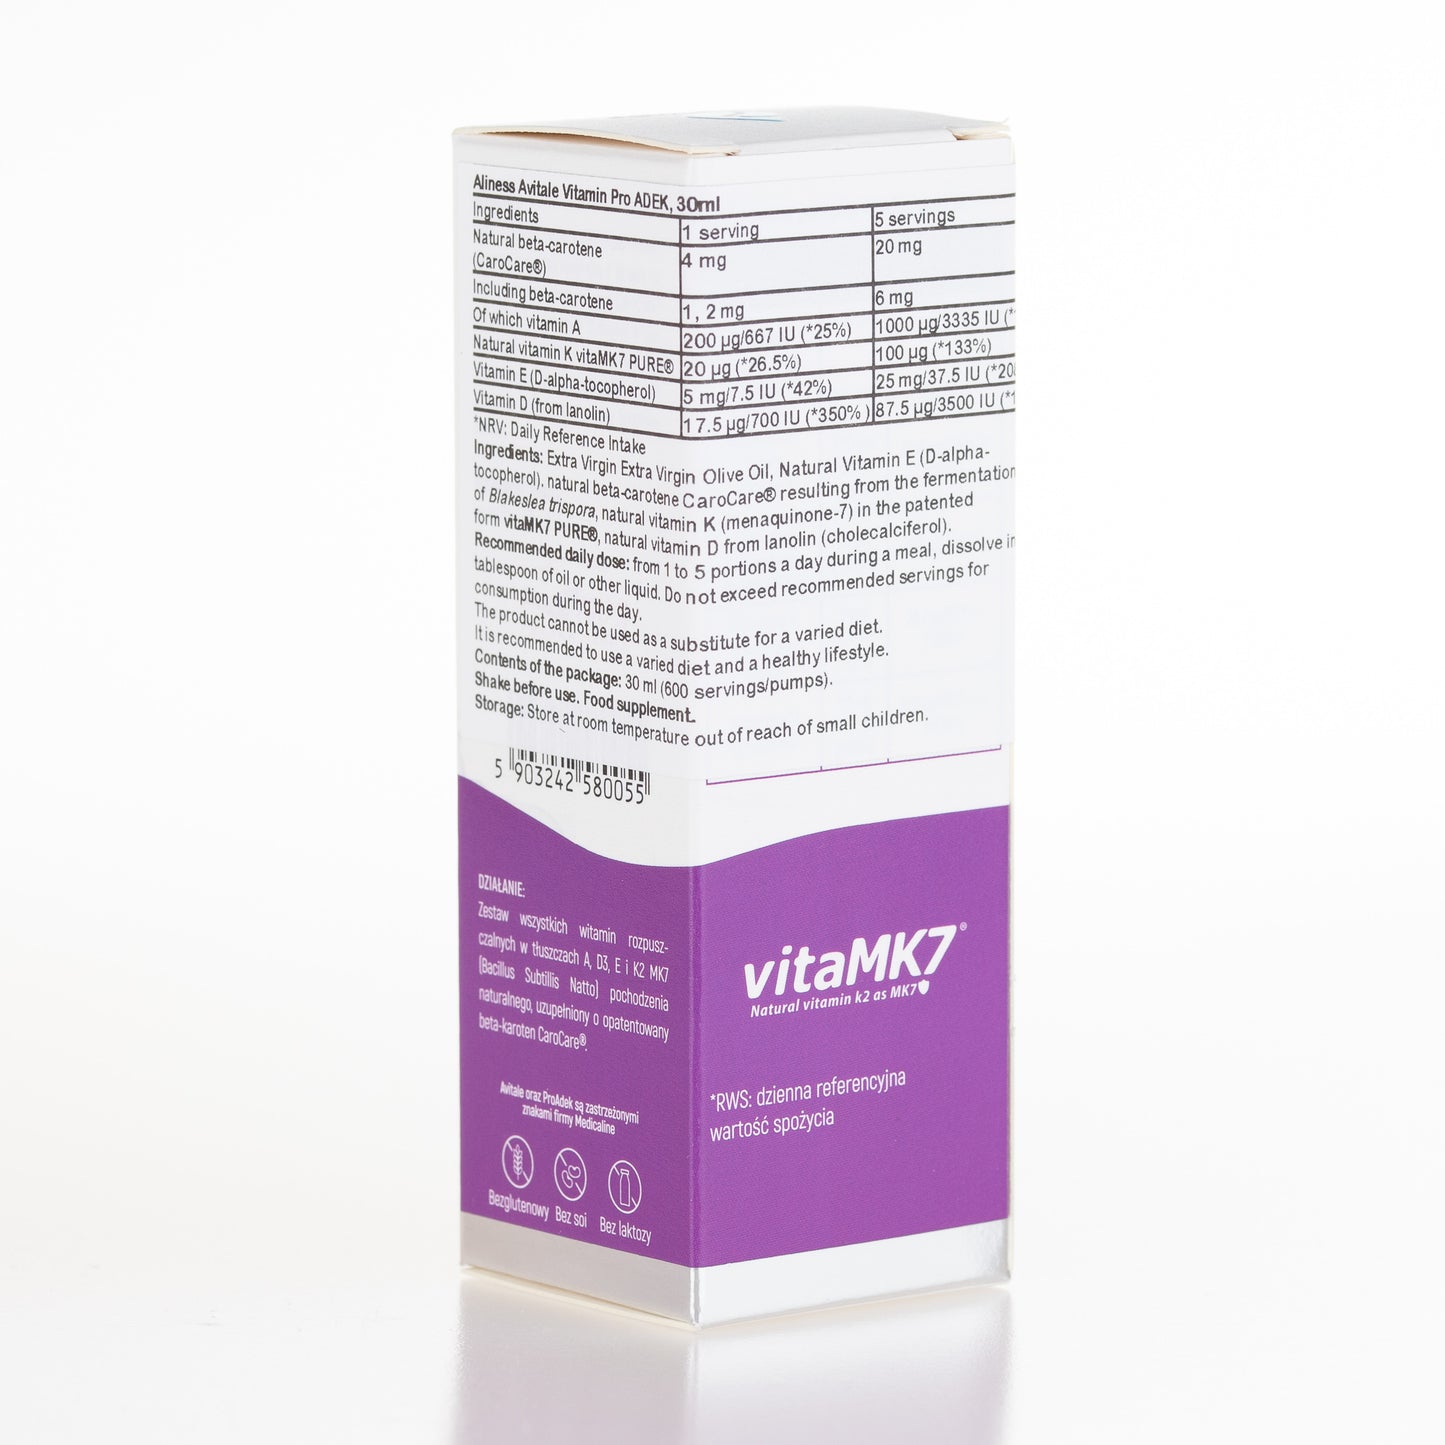 Avitale liquid Vitamin Pro ADEK drops, fat soluble vitamins, 30ml, in drops Aliness